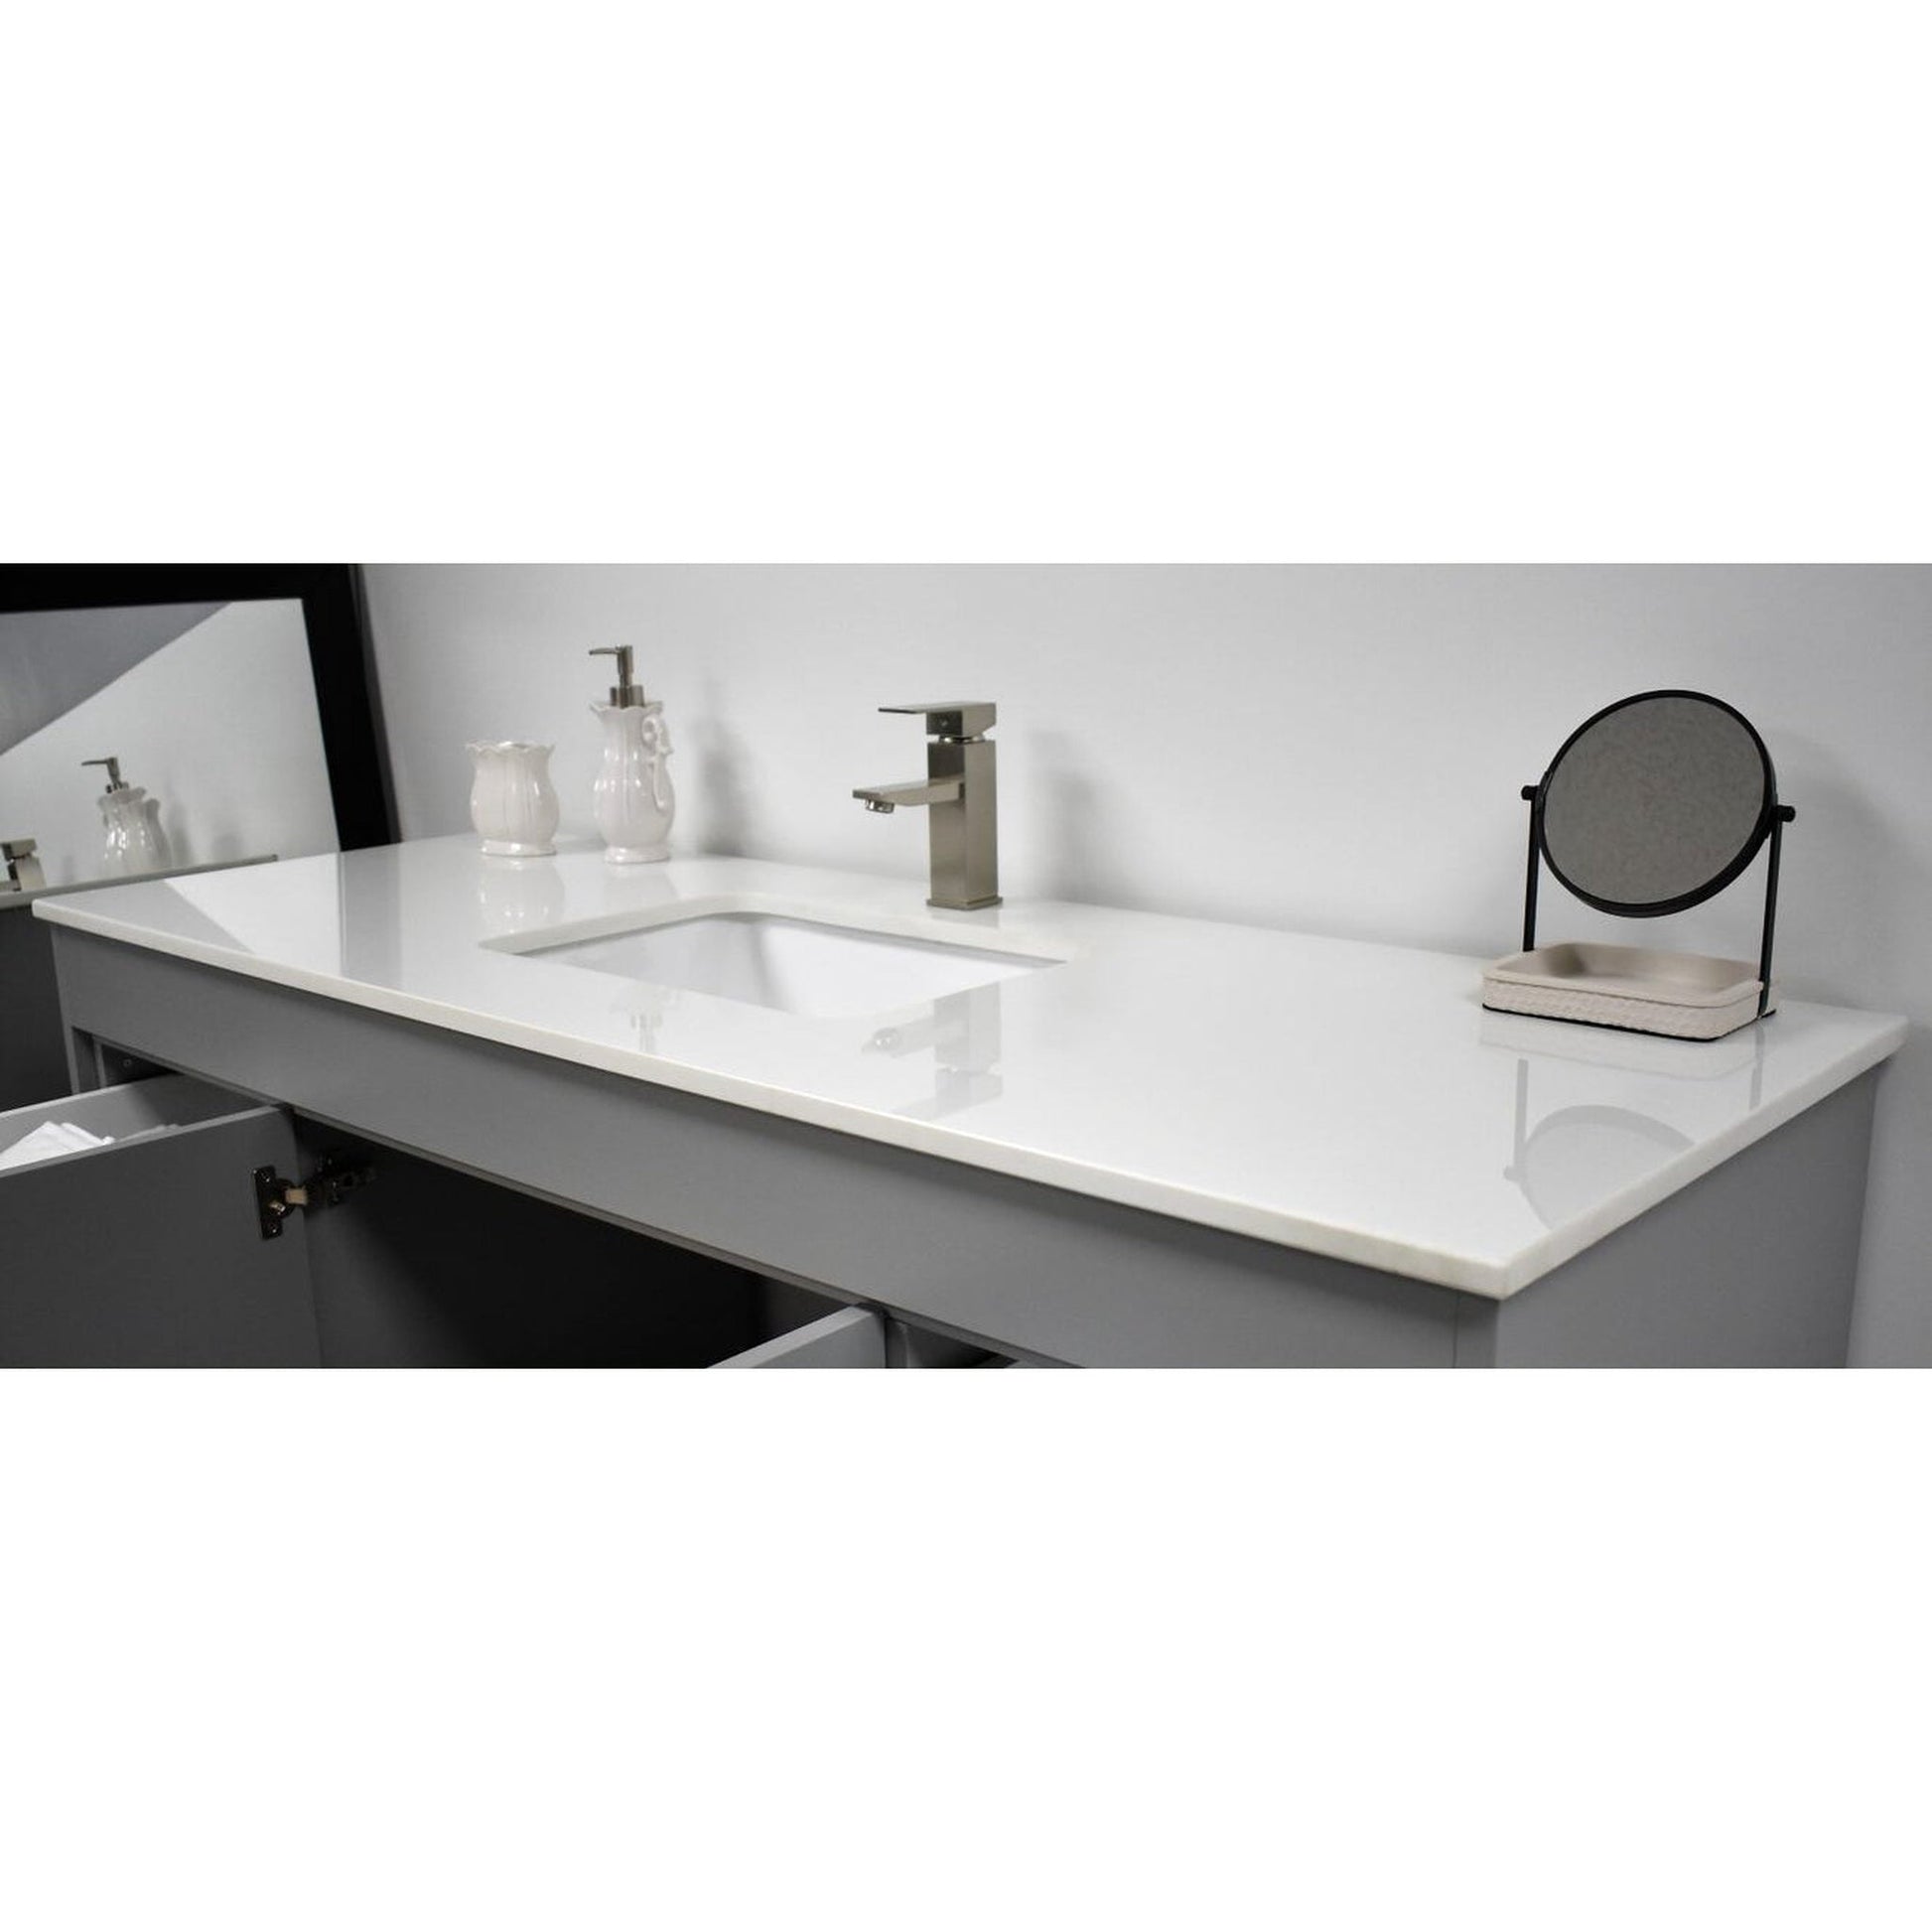 Volpa USA Capri 60" x 22" Gray Freestanding Modern Bathroom Vanity With Undermount Single Sink And White Microstone Top With Brushed Nickel Edge Handles